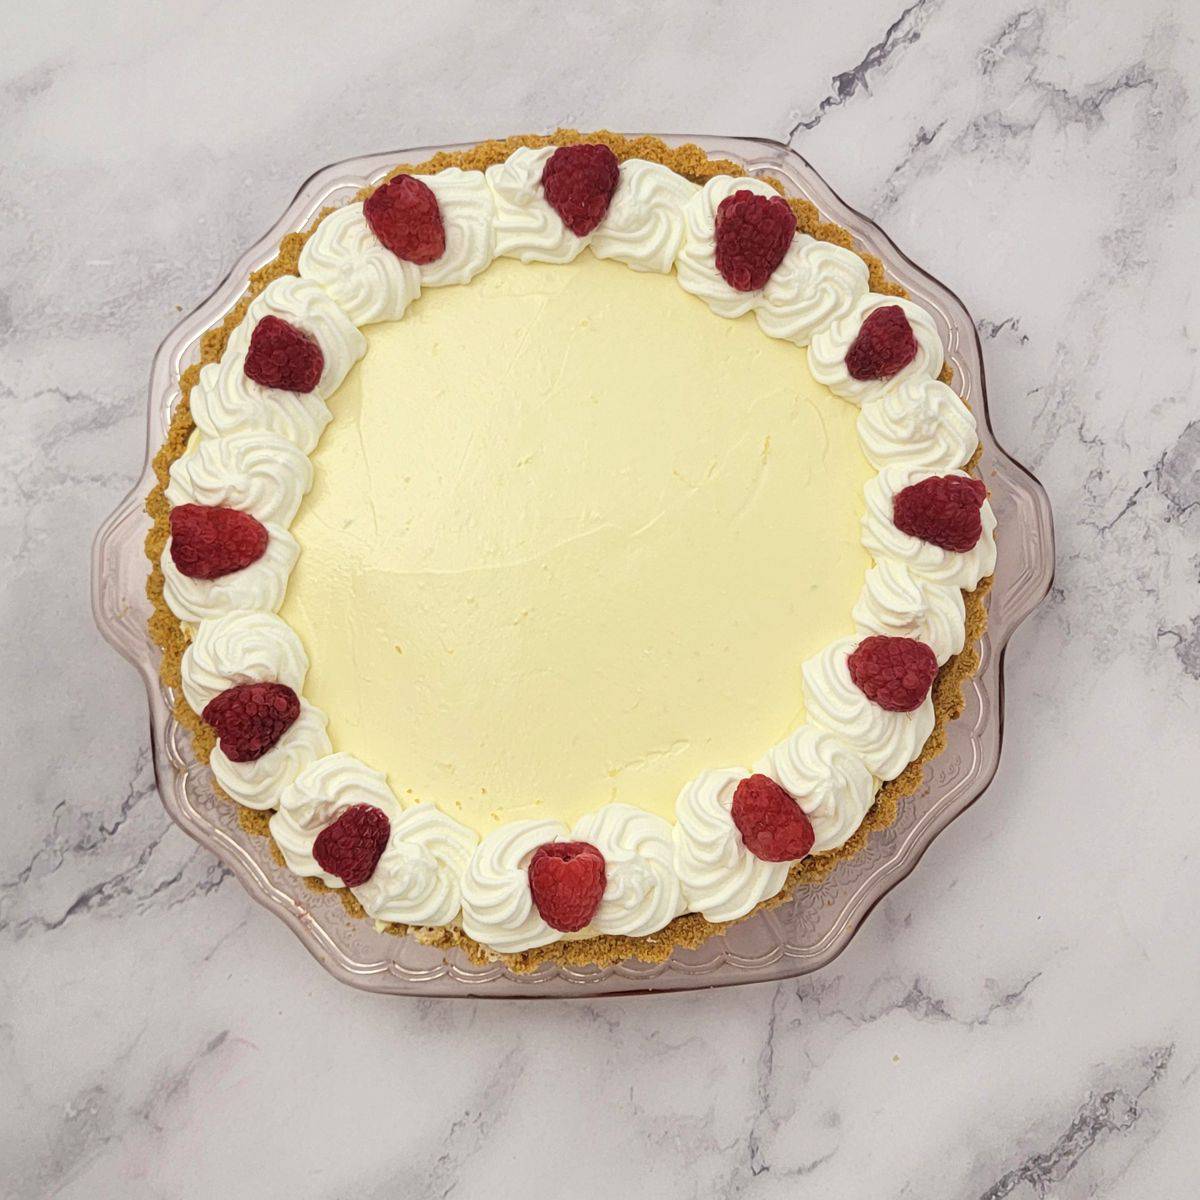 overhead view of lemon cream no bake pie with whipped cream and raspberries